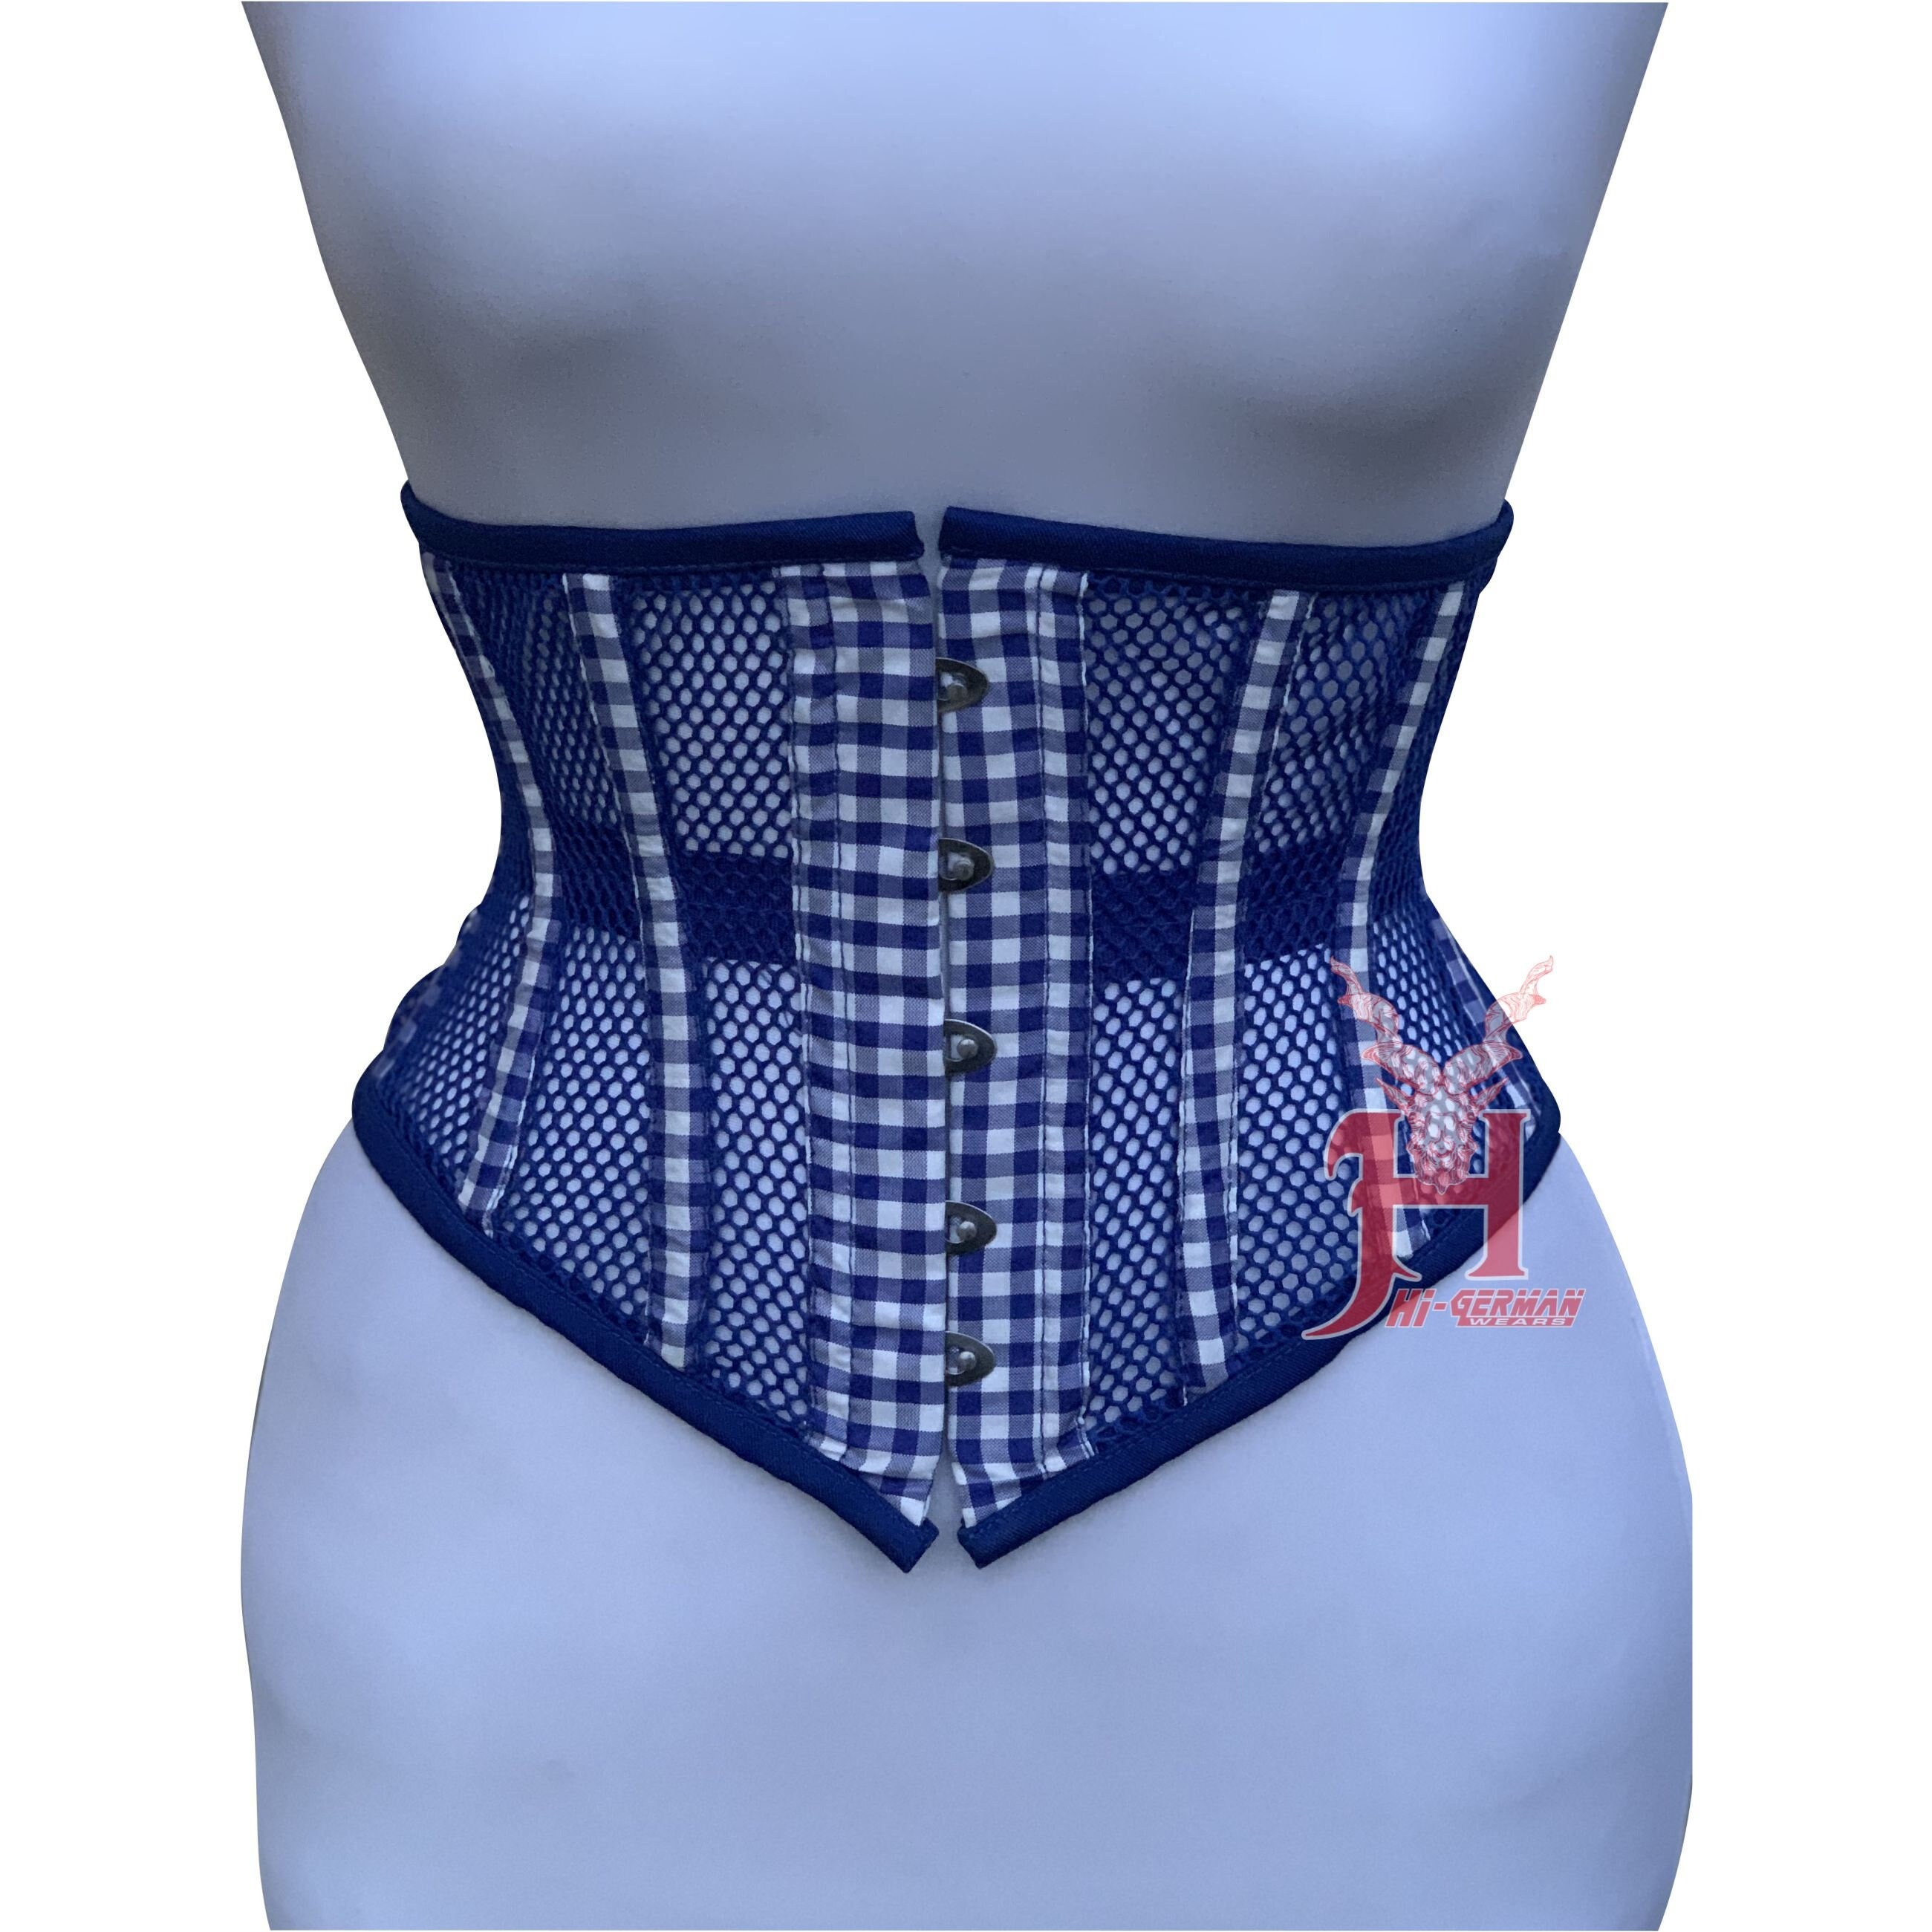 Royal Blue overbust corset — Silent Beaute